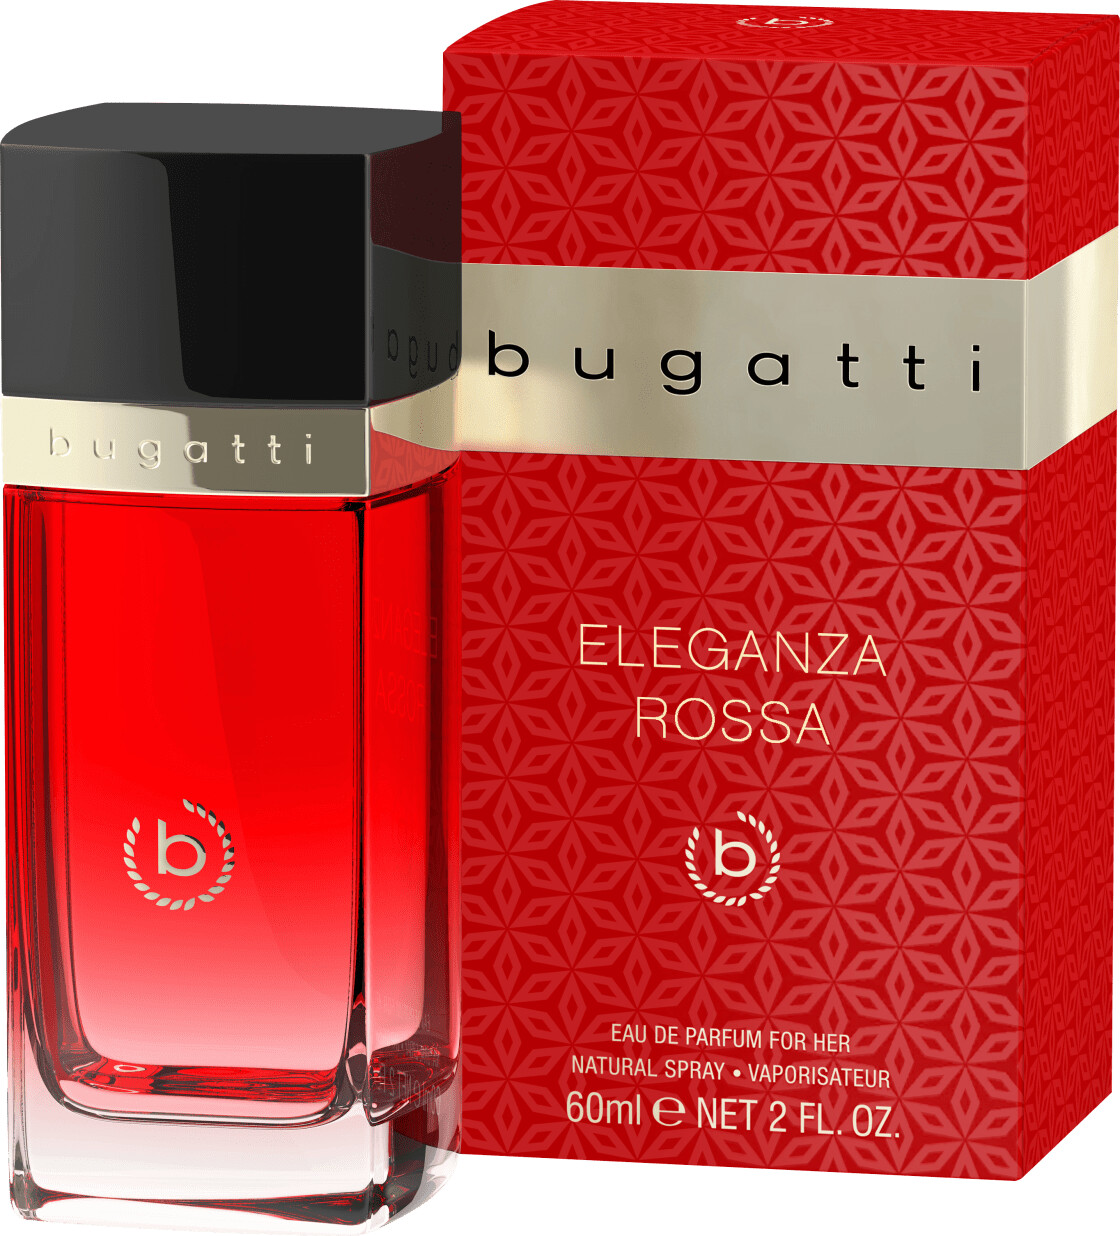 17,45 Rossa Parfum bei Preisvergleich Bugatti Eau ab de (60ml) € Eleganza |